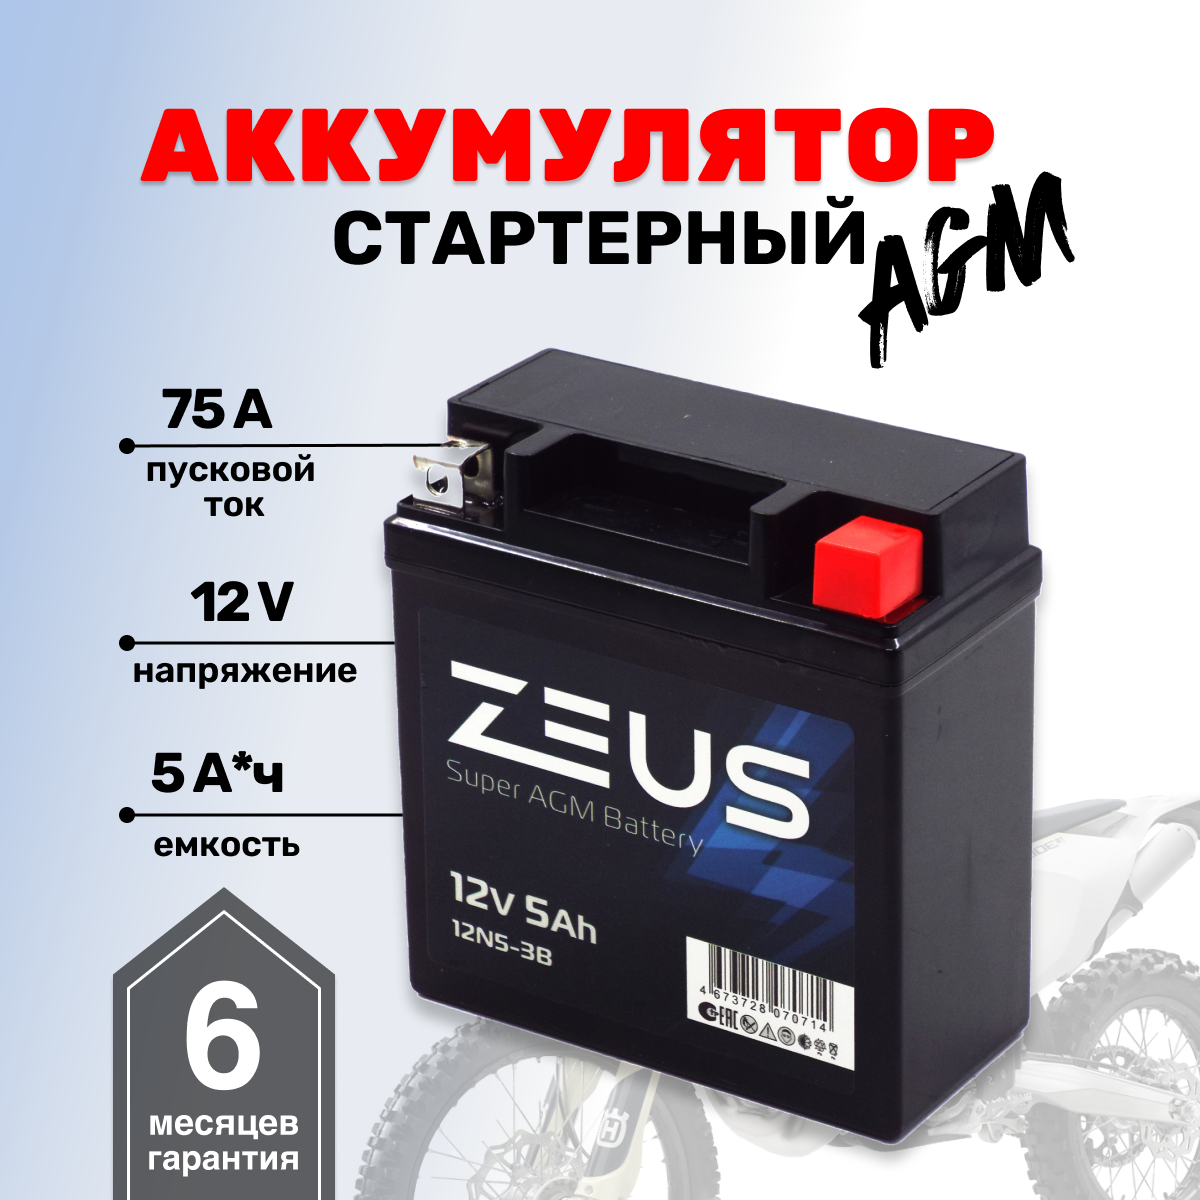 Аккумулятор ZEUS SUPER AGM 5 Ач Обратная полярность (12N5-3B)